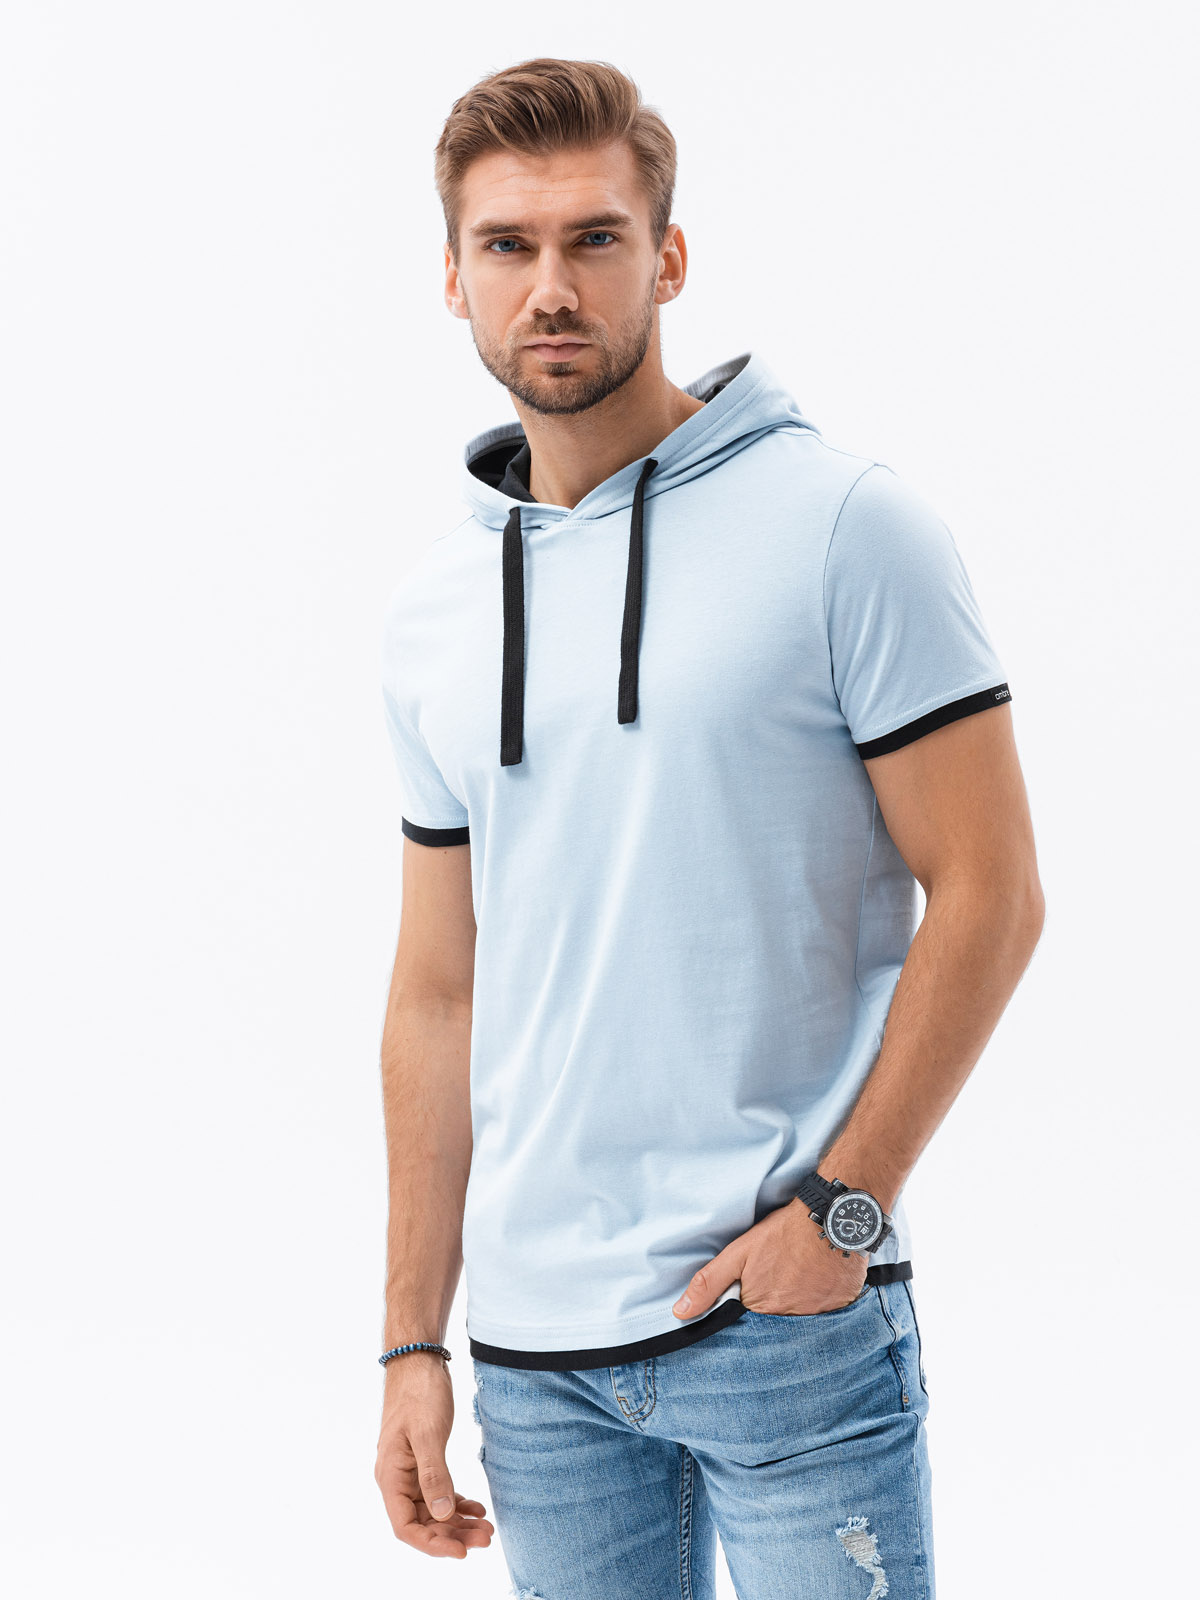 Men\'s plain blue clothing - Men\'s S1376 hooded | light Ombre.com - online t-shirt